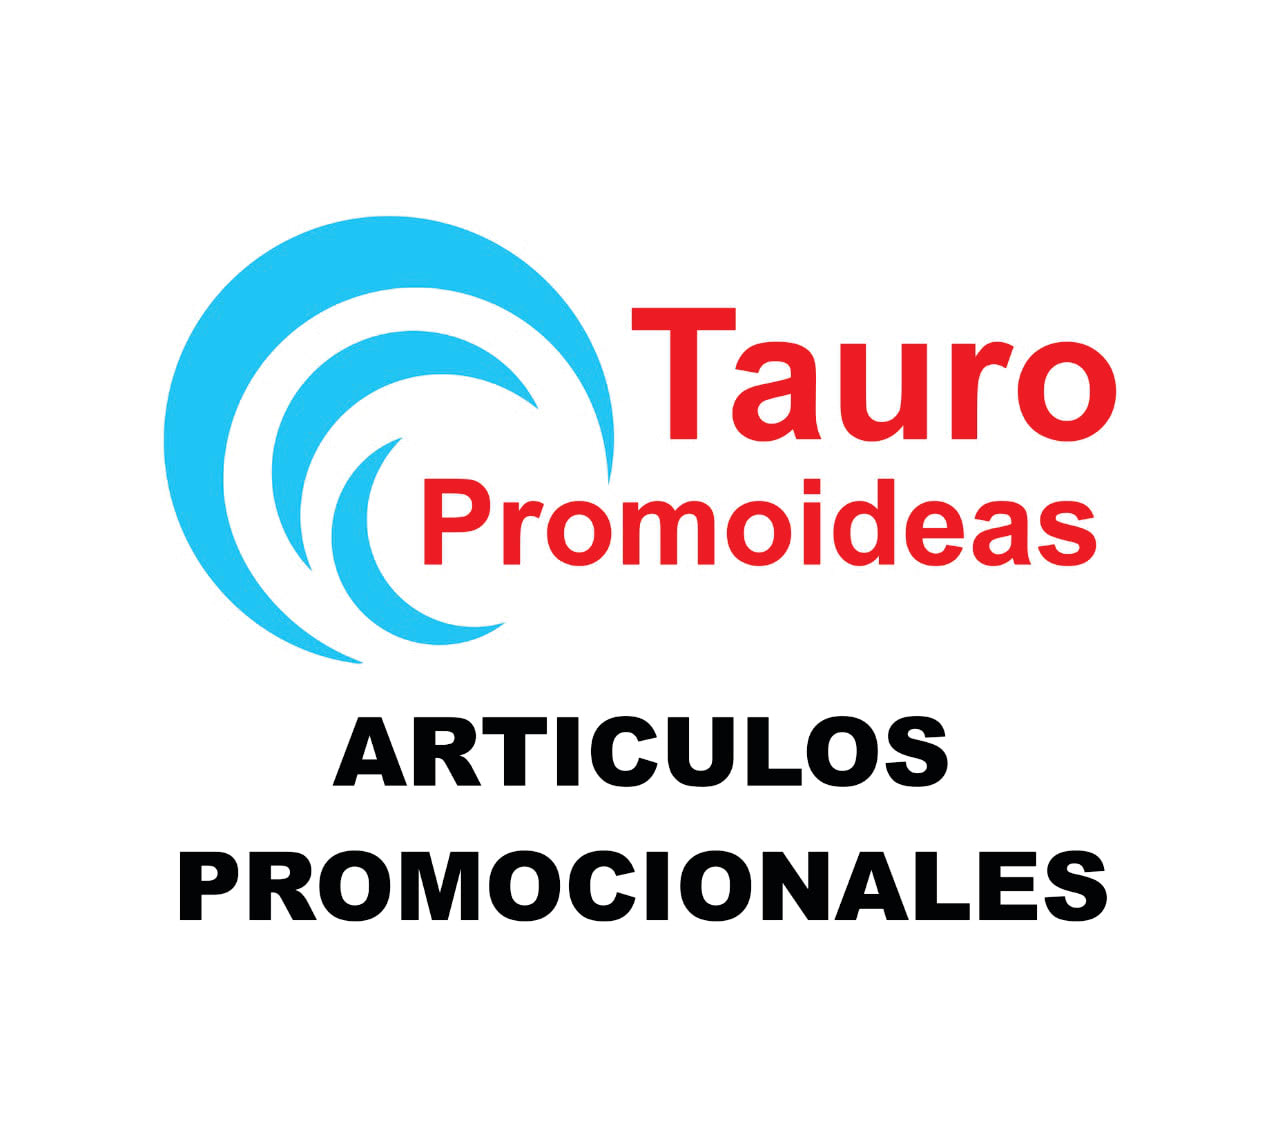 Promoideas Tauro